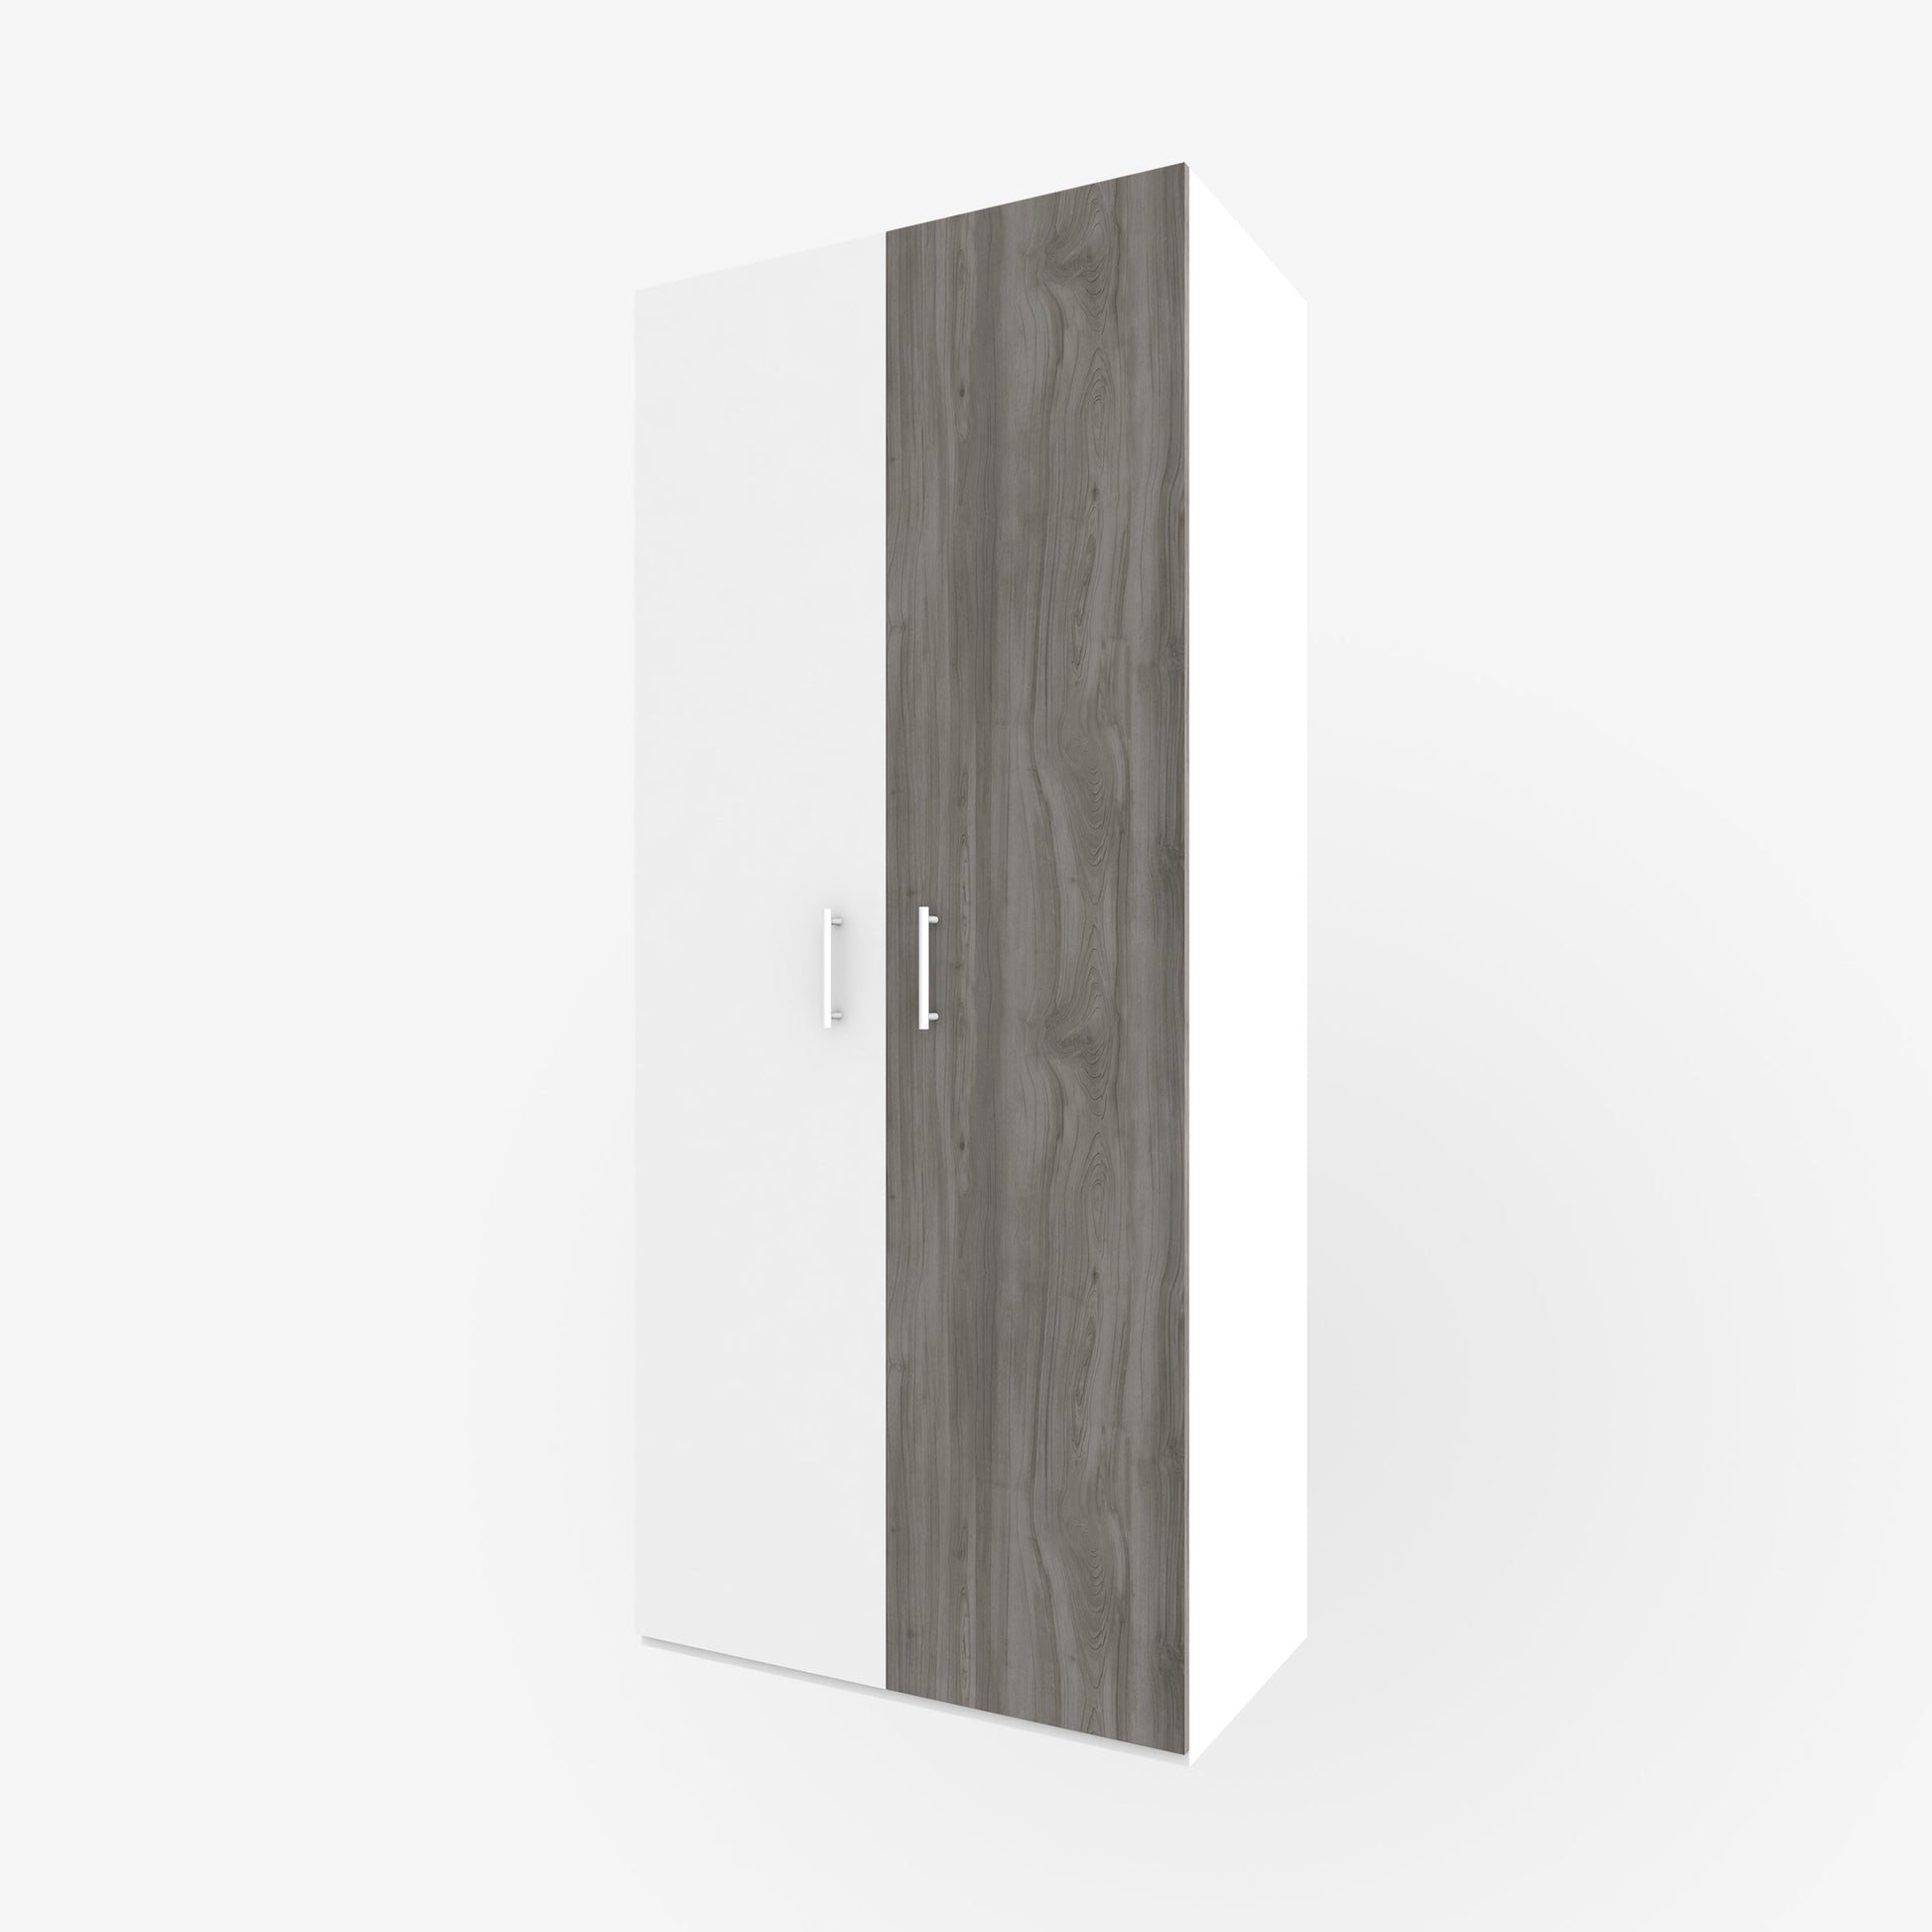 19.5" x 79" warm wood tone echowood slab door for Ikea or Swedeboxx pax closet cabinet